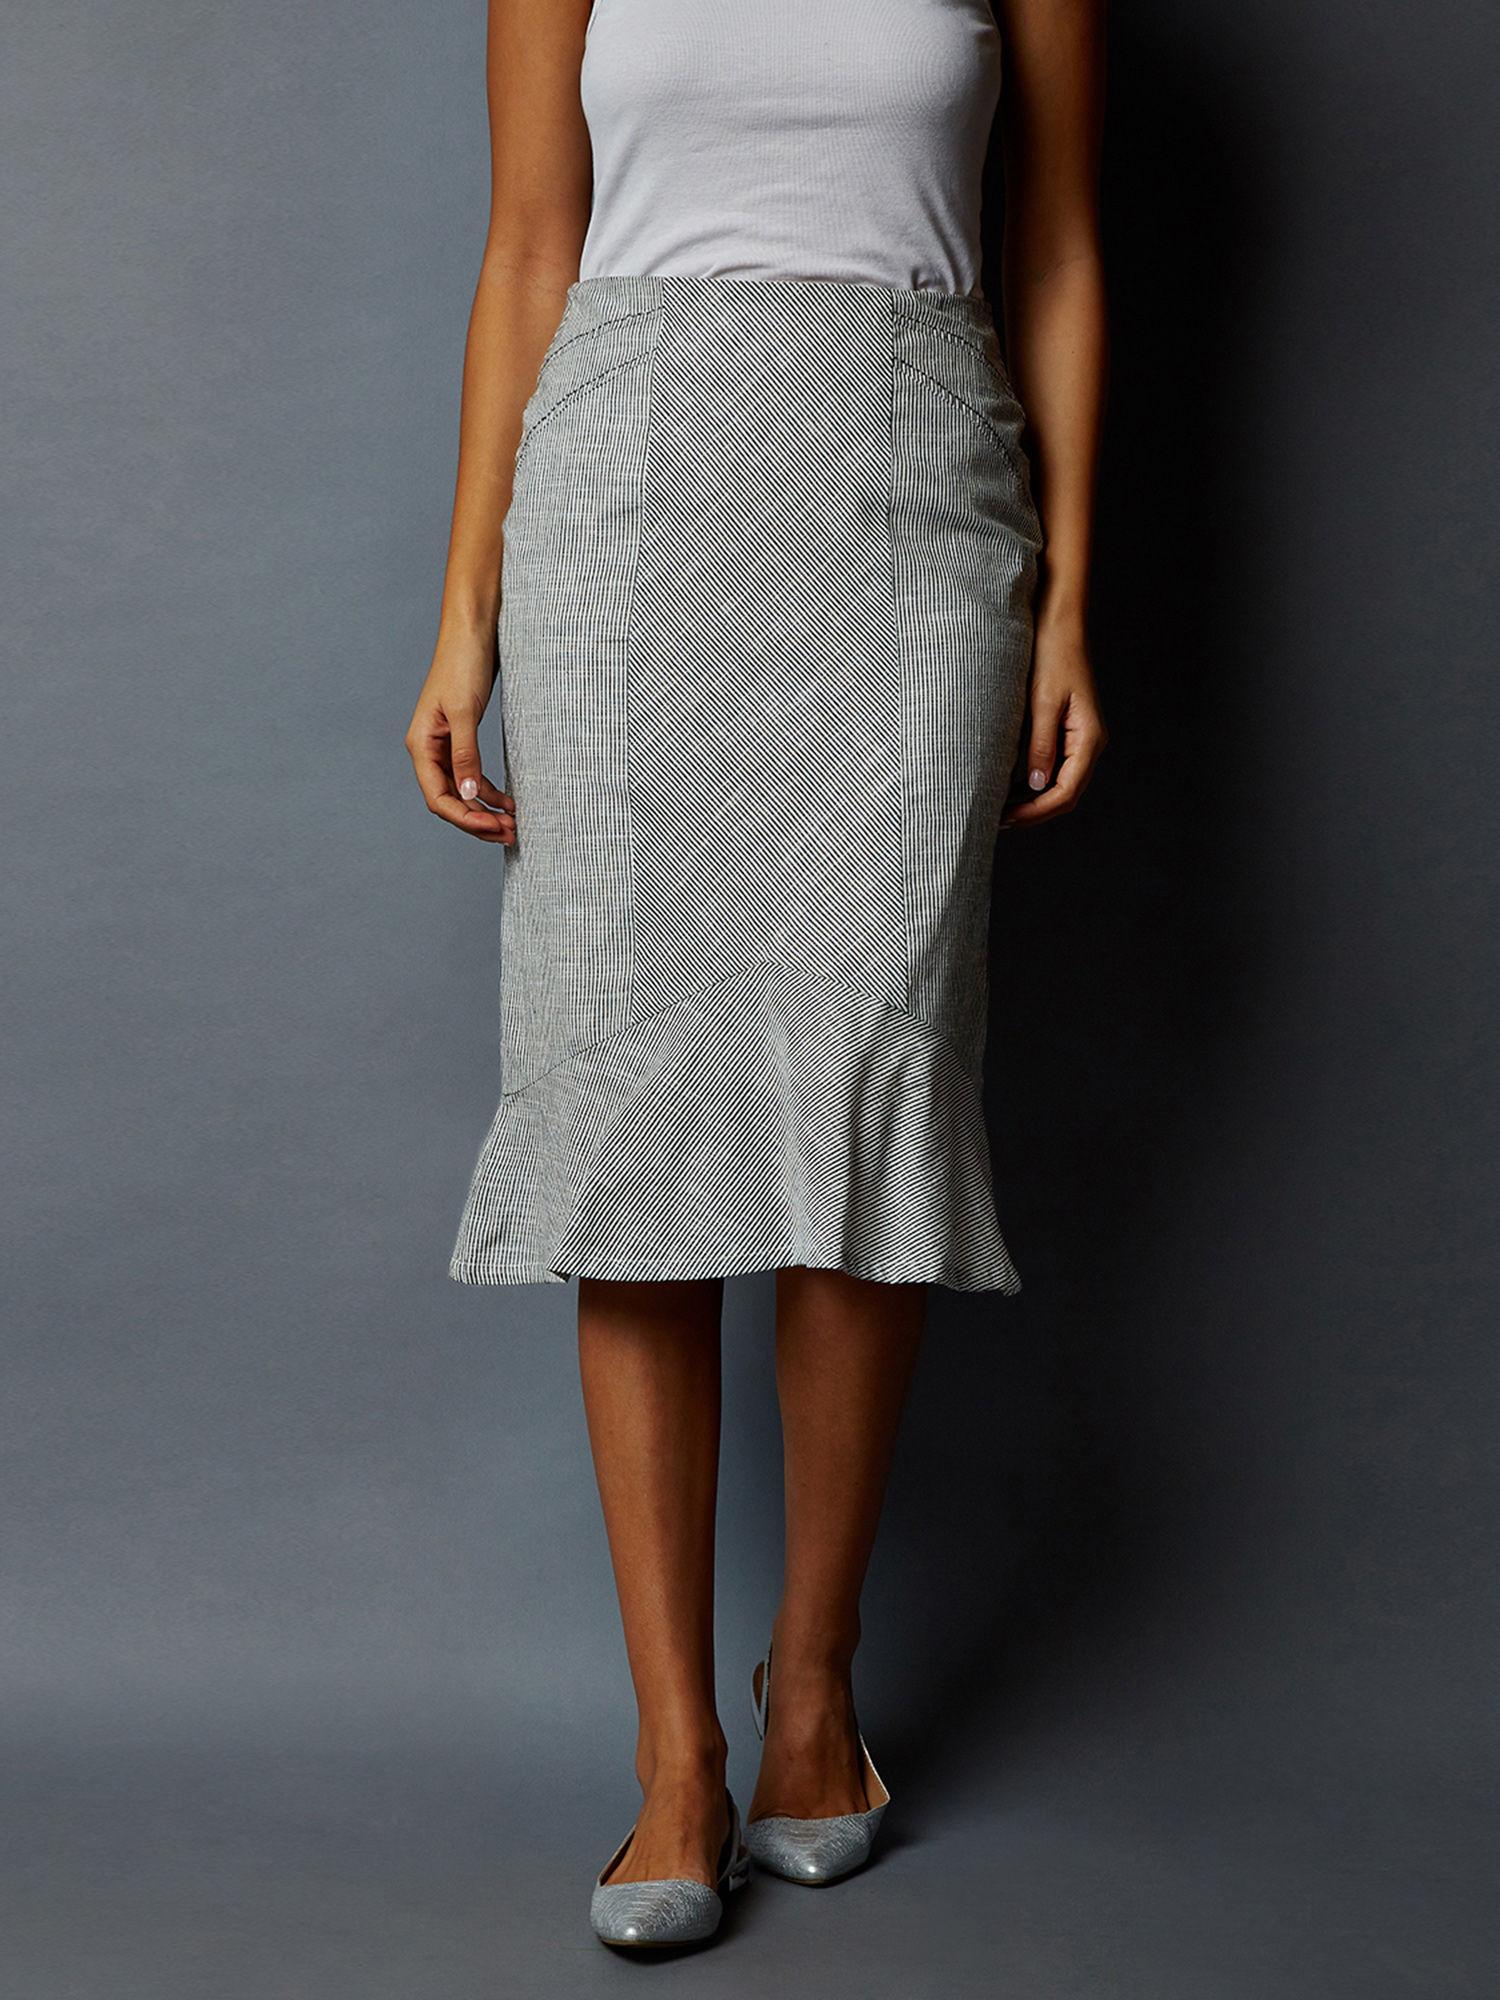 grey striped paneled peplum skirt